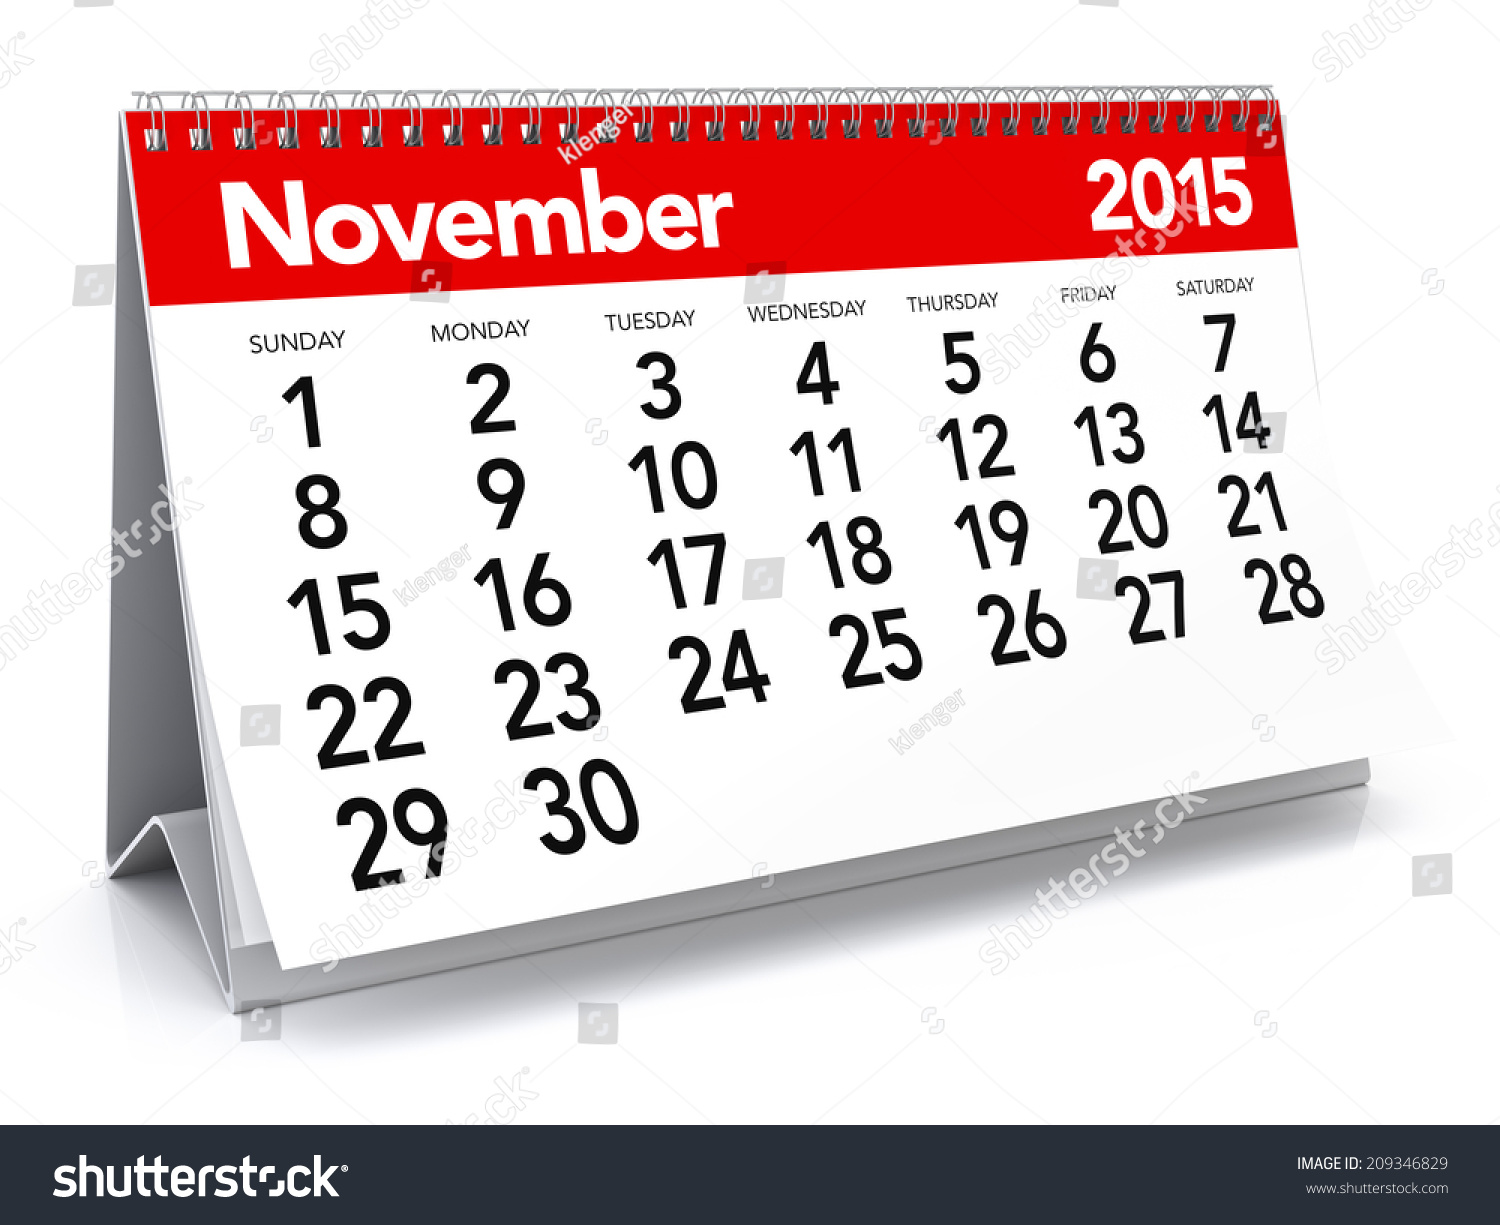 November 2015 Calendar Stock Photo 209346829 : Shutterstock